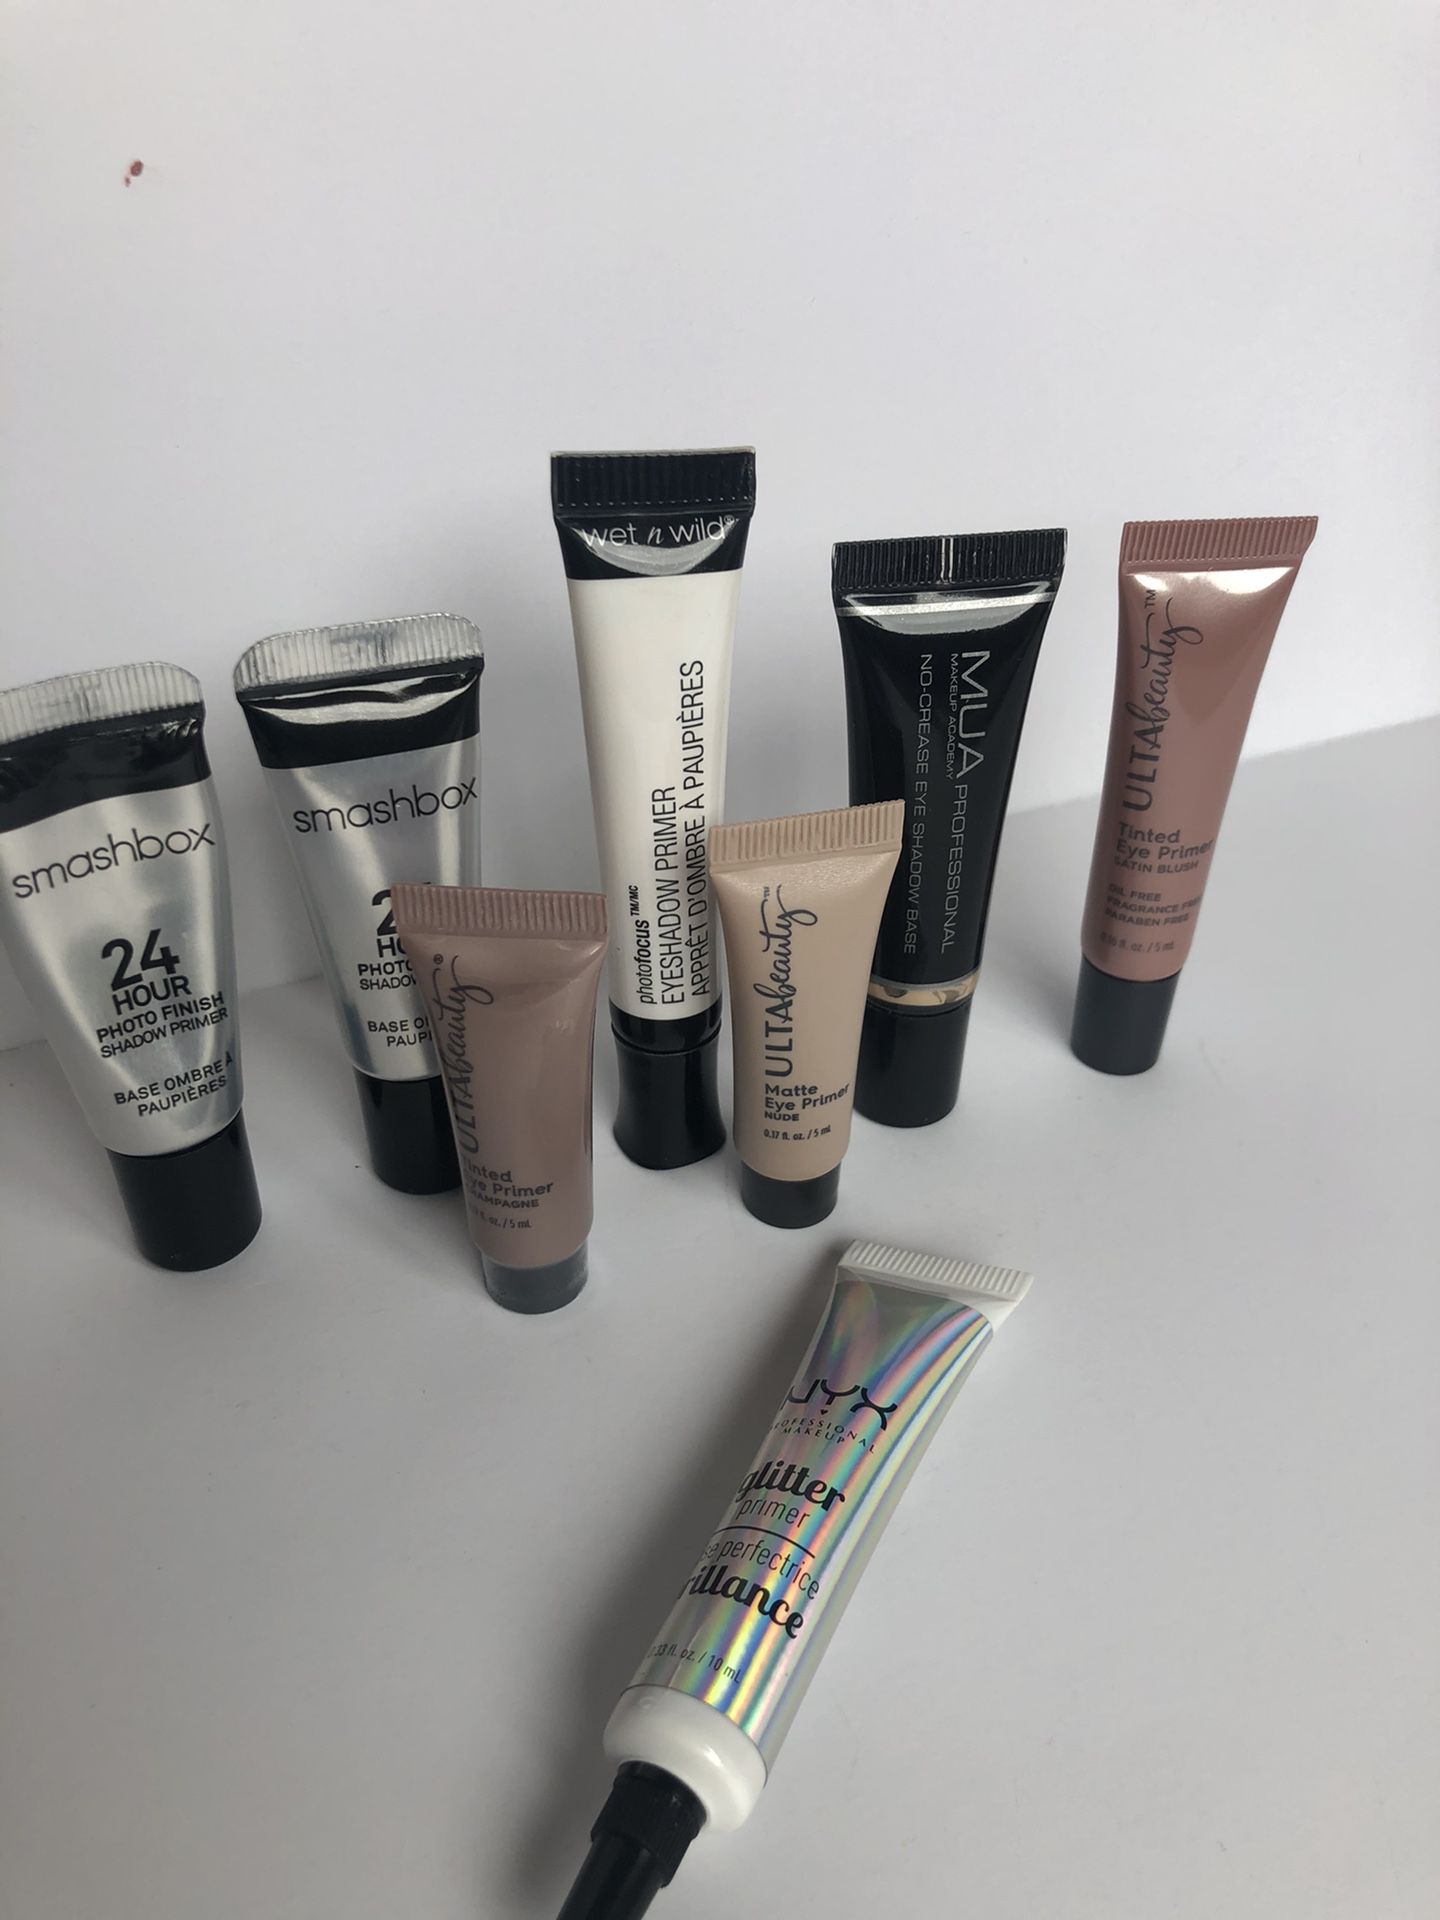 Eyeshadow Primer Makeup Beauty Bundle Cruelty Free - Smashbox, Nyx, and more!